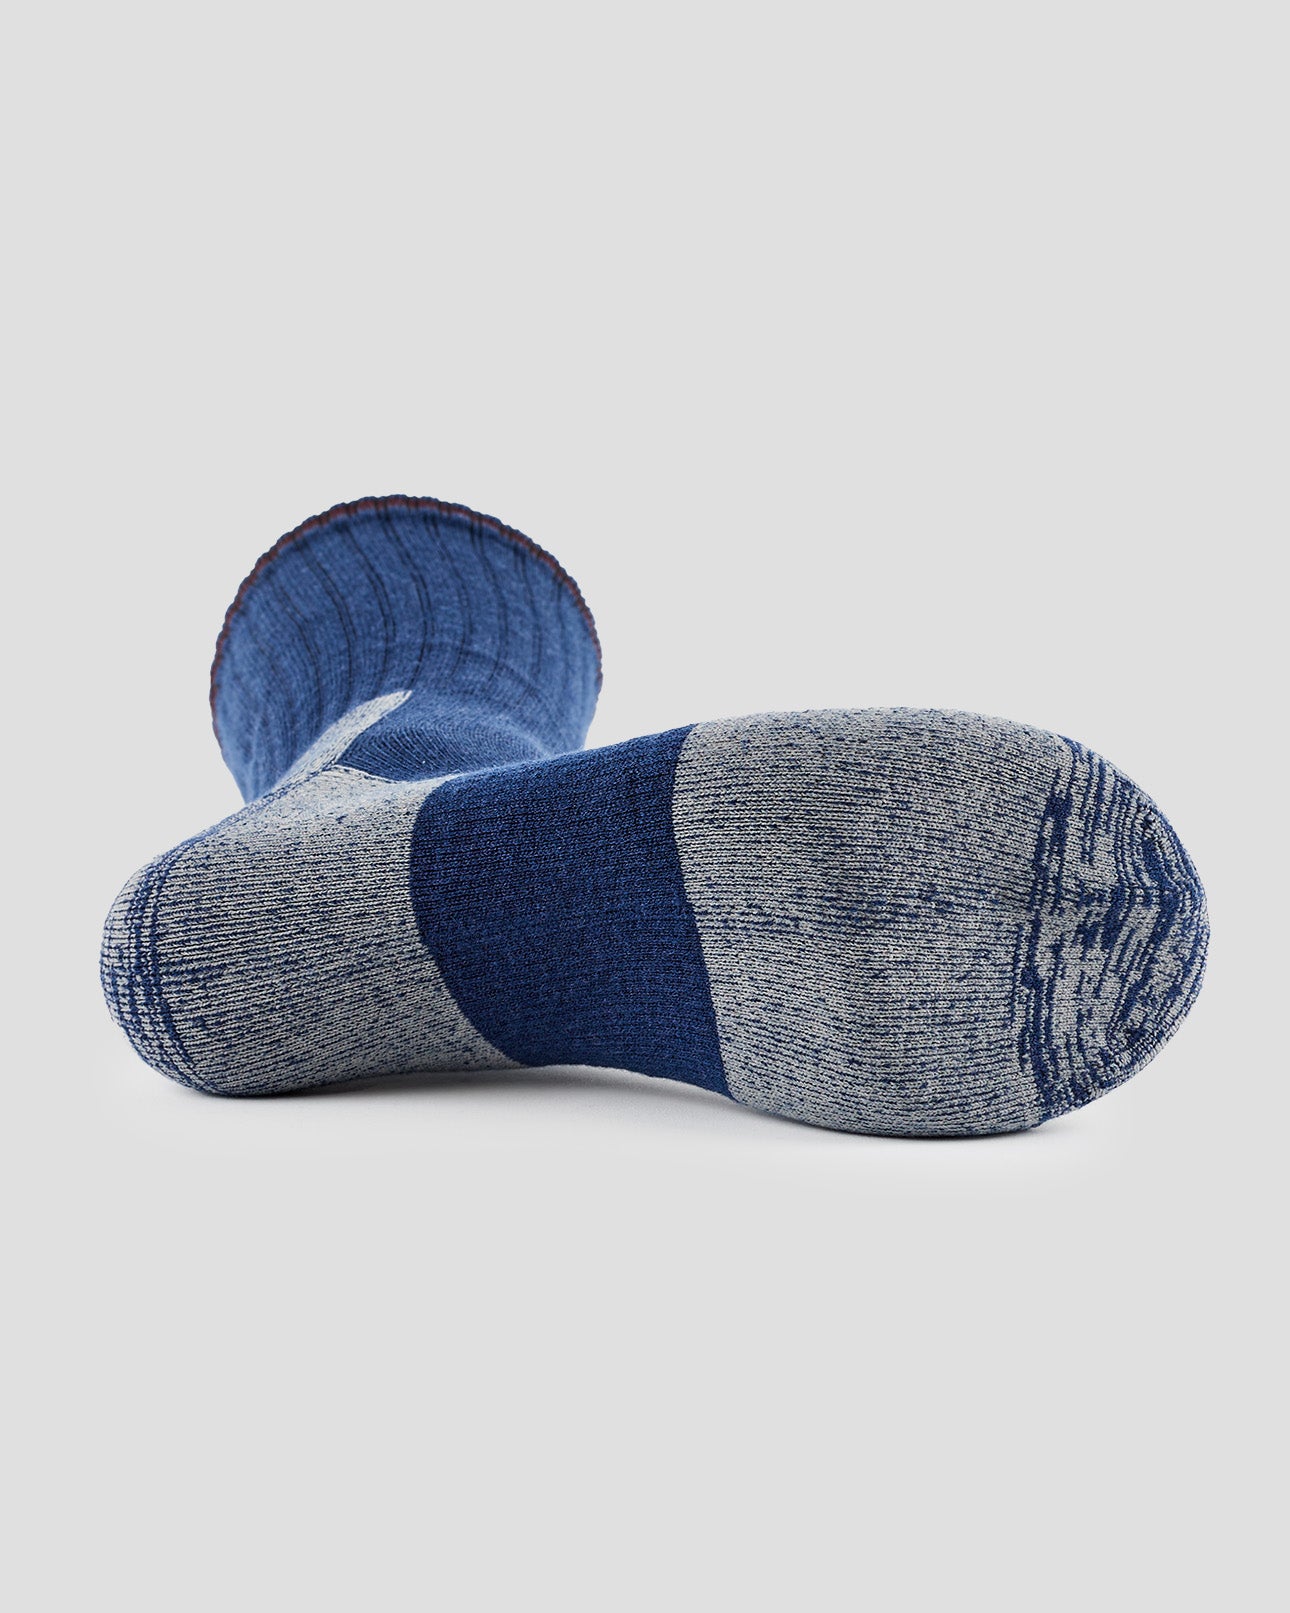 2PK ATP Merino Hiker Sock | Color: Grey/Navy